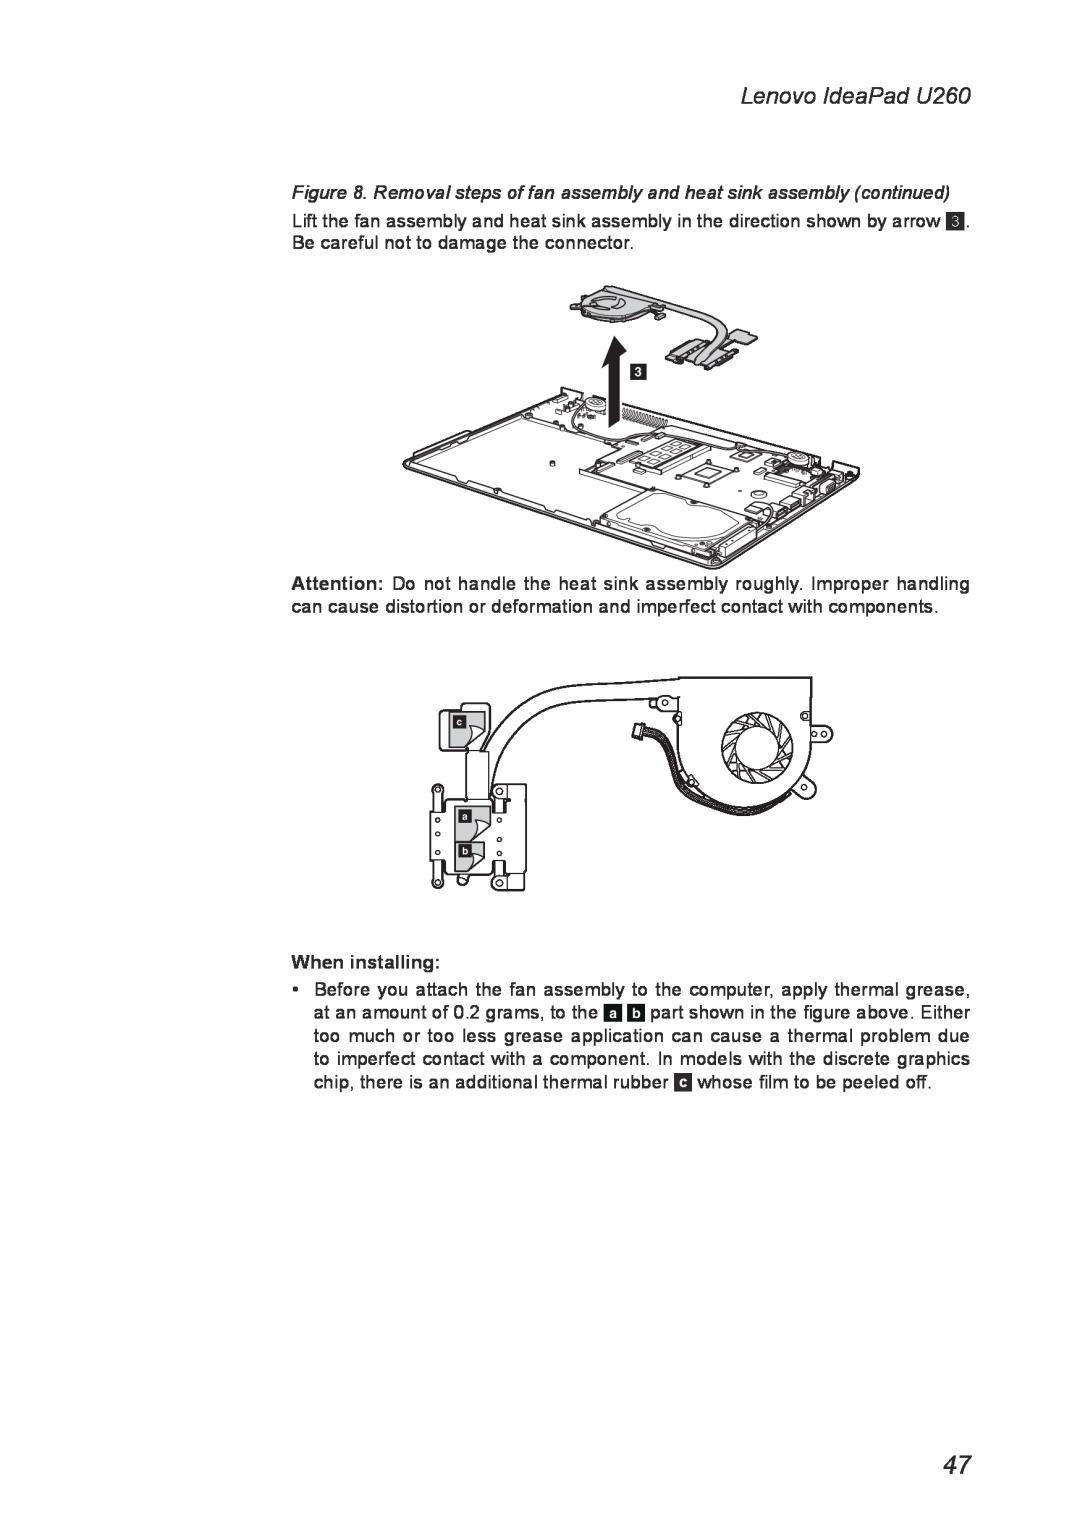 Lenovo manual Lenovo IdeaPad U260, When installing, c a b 